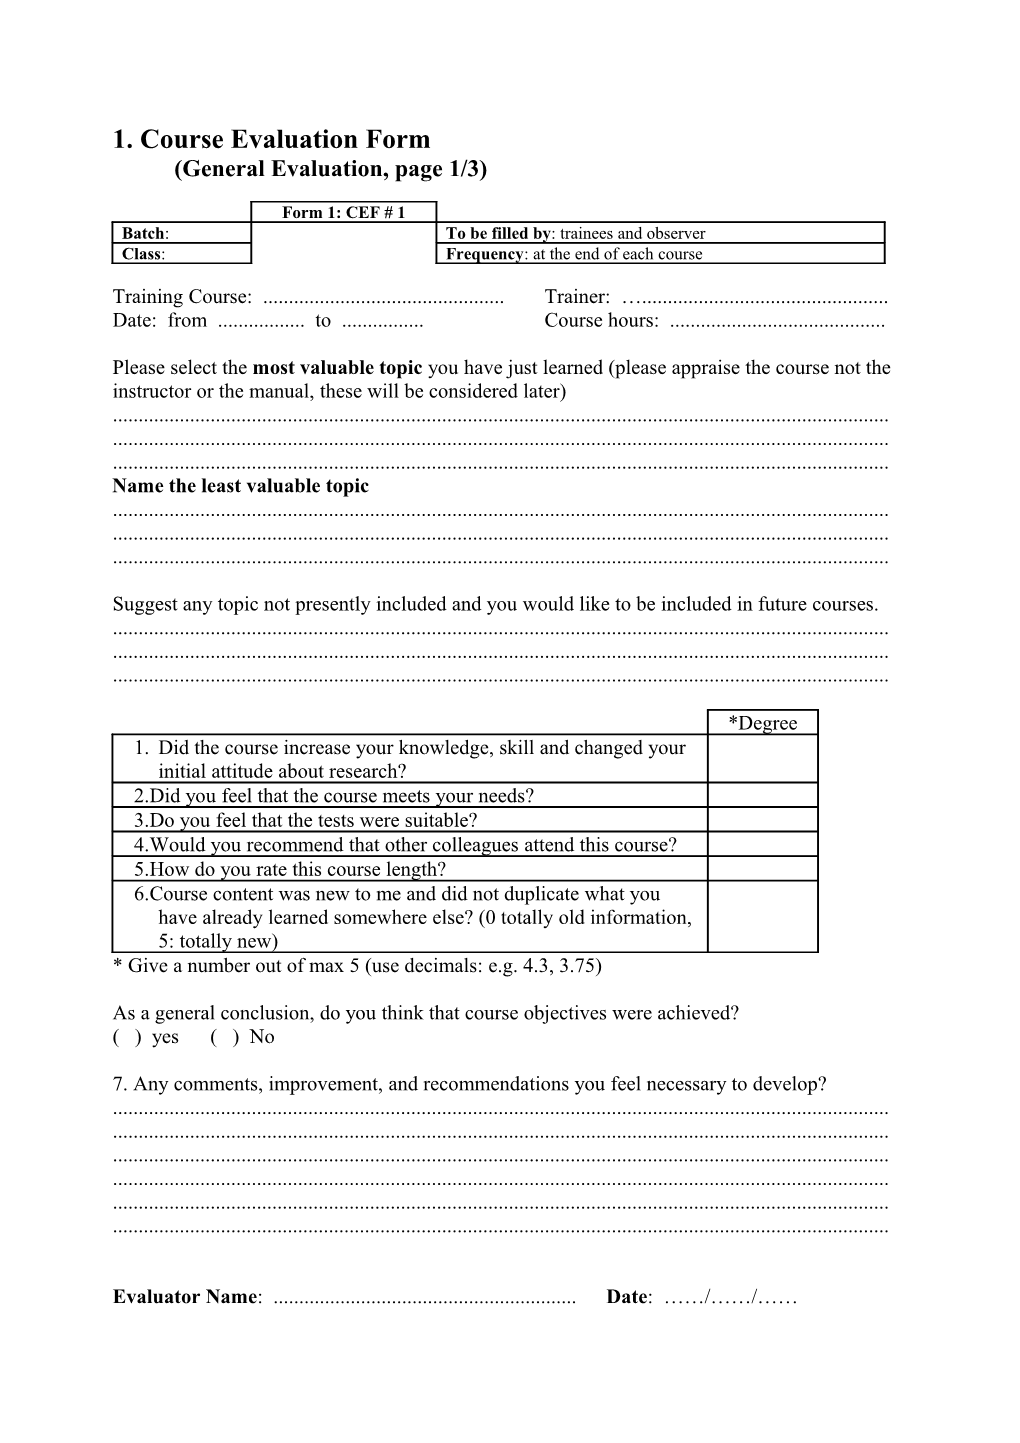 Session Evaluation Form